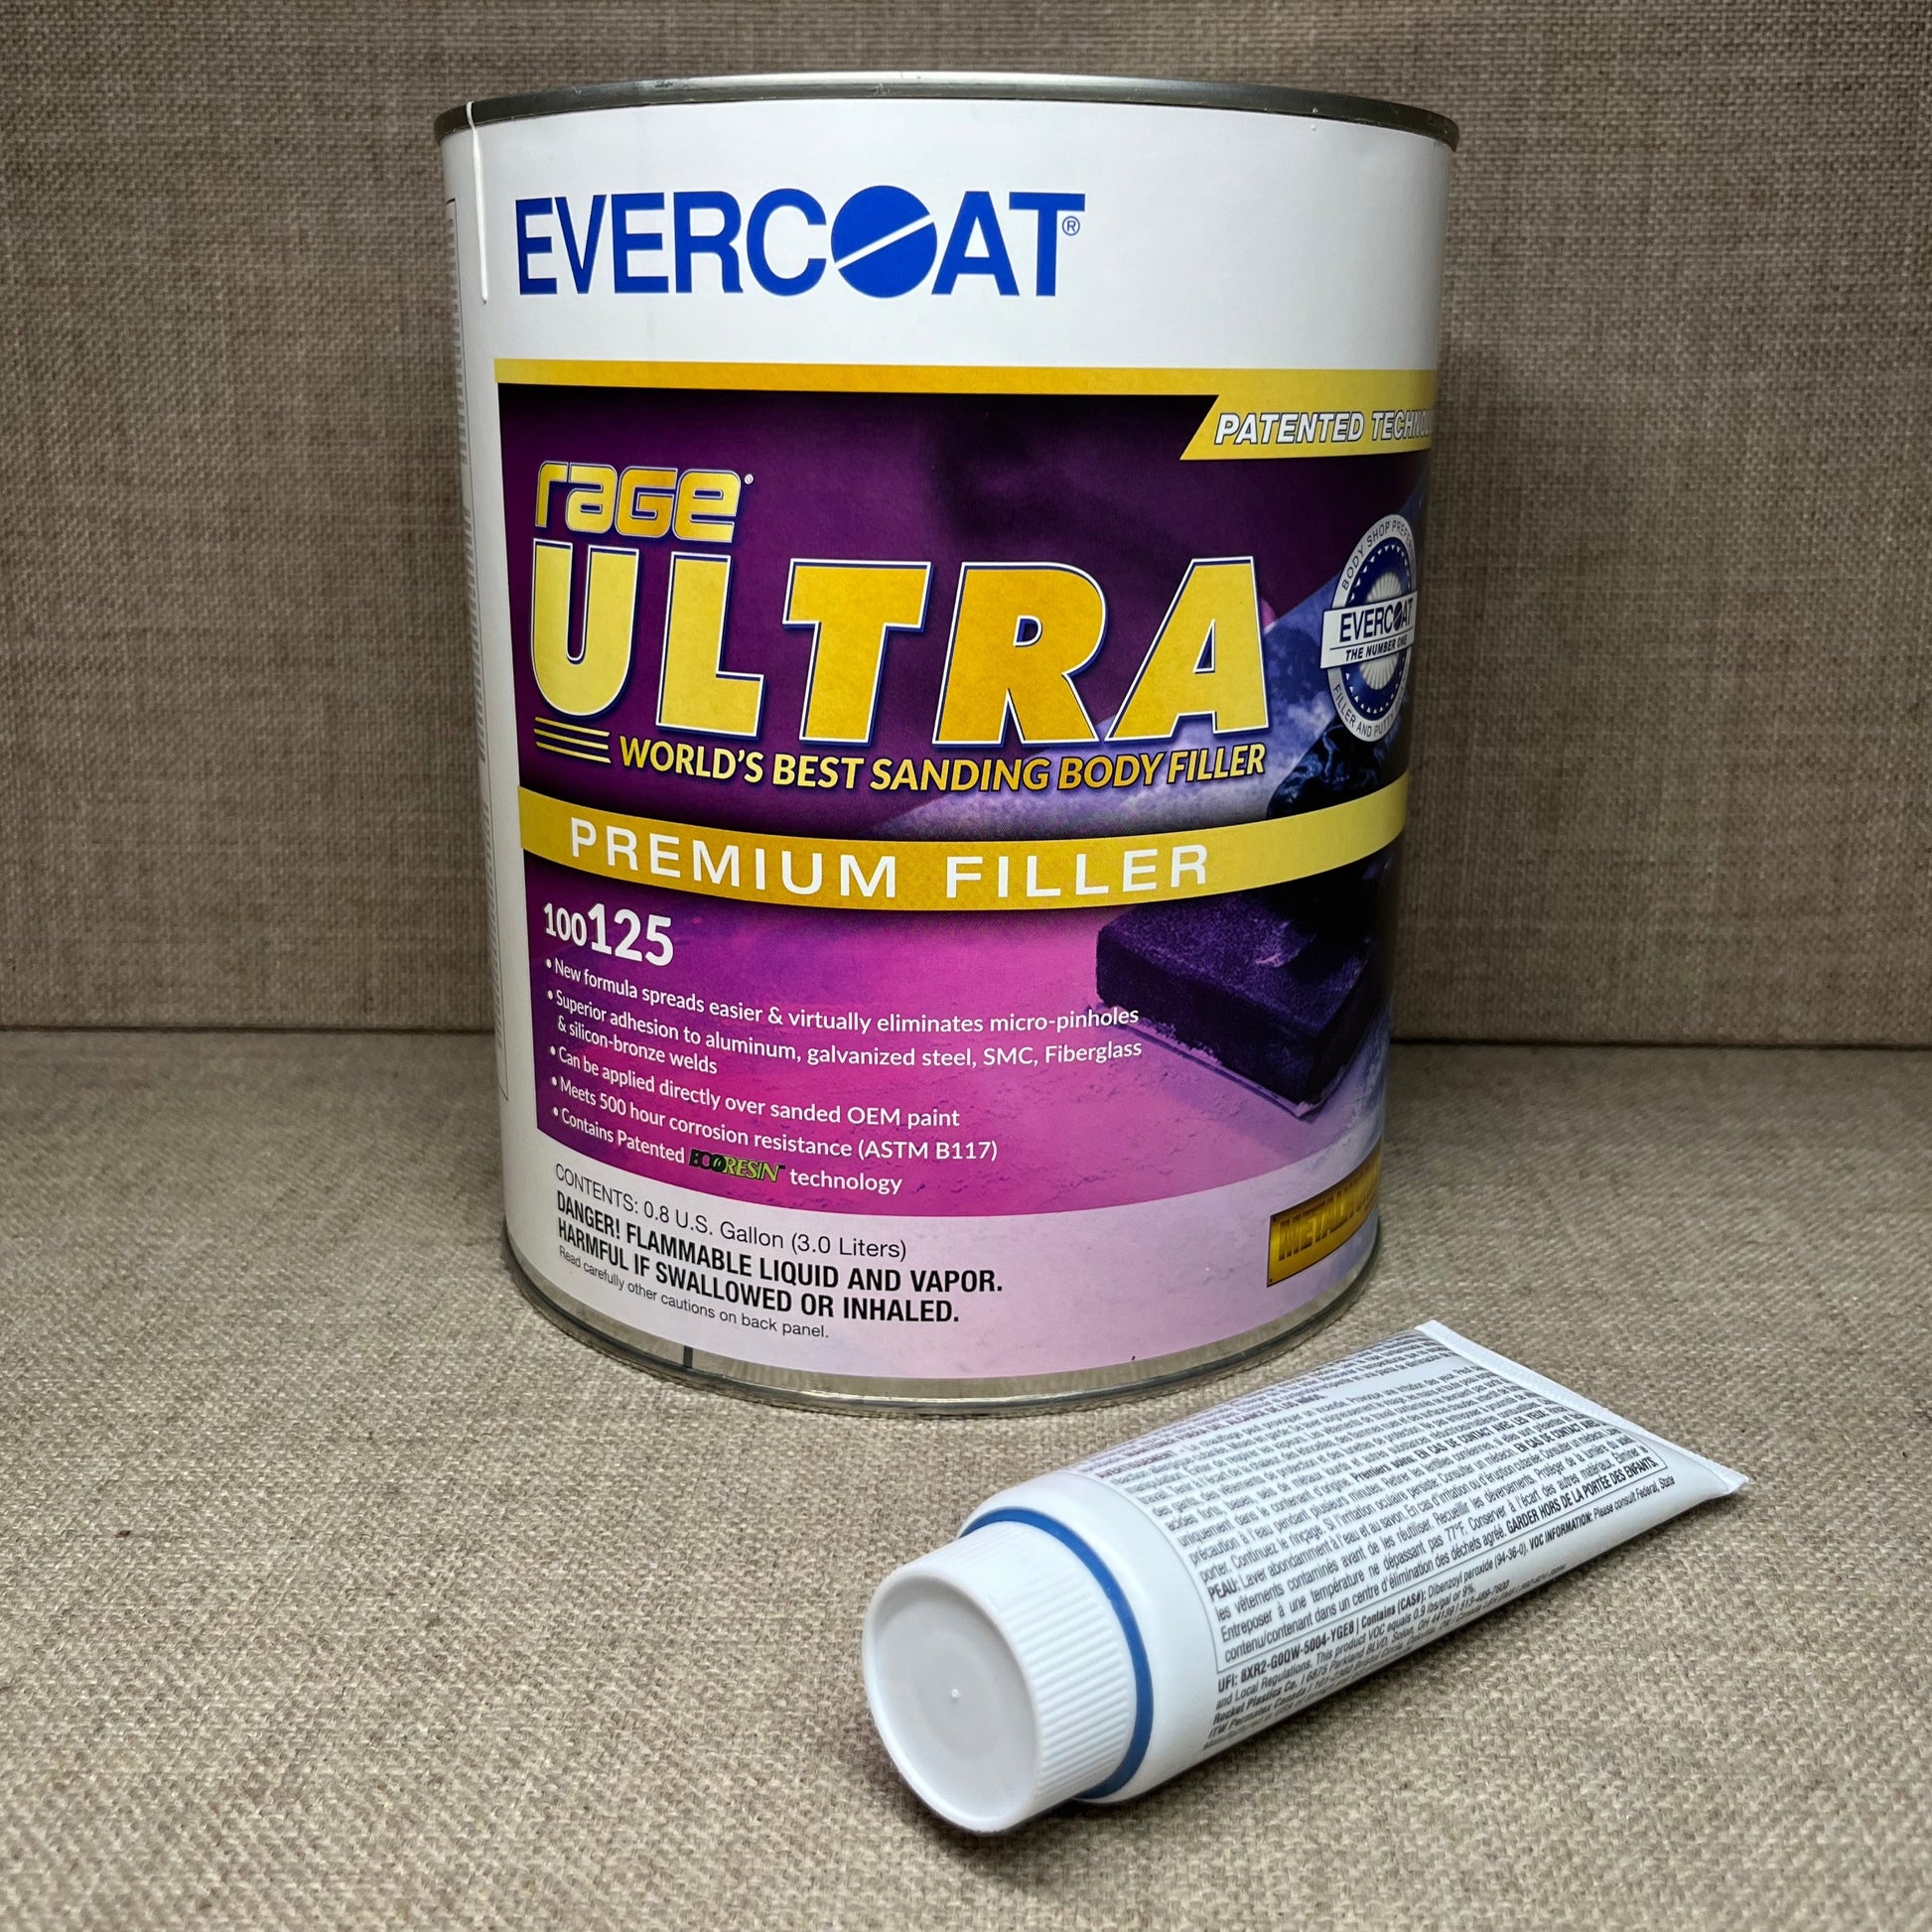 Evercoat Rage Ultra Body Filler (128 Fl. oz) with Hardener (100125